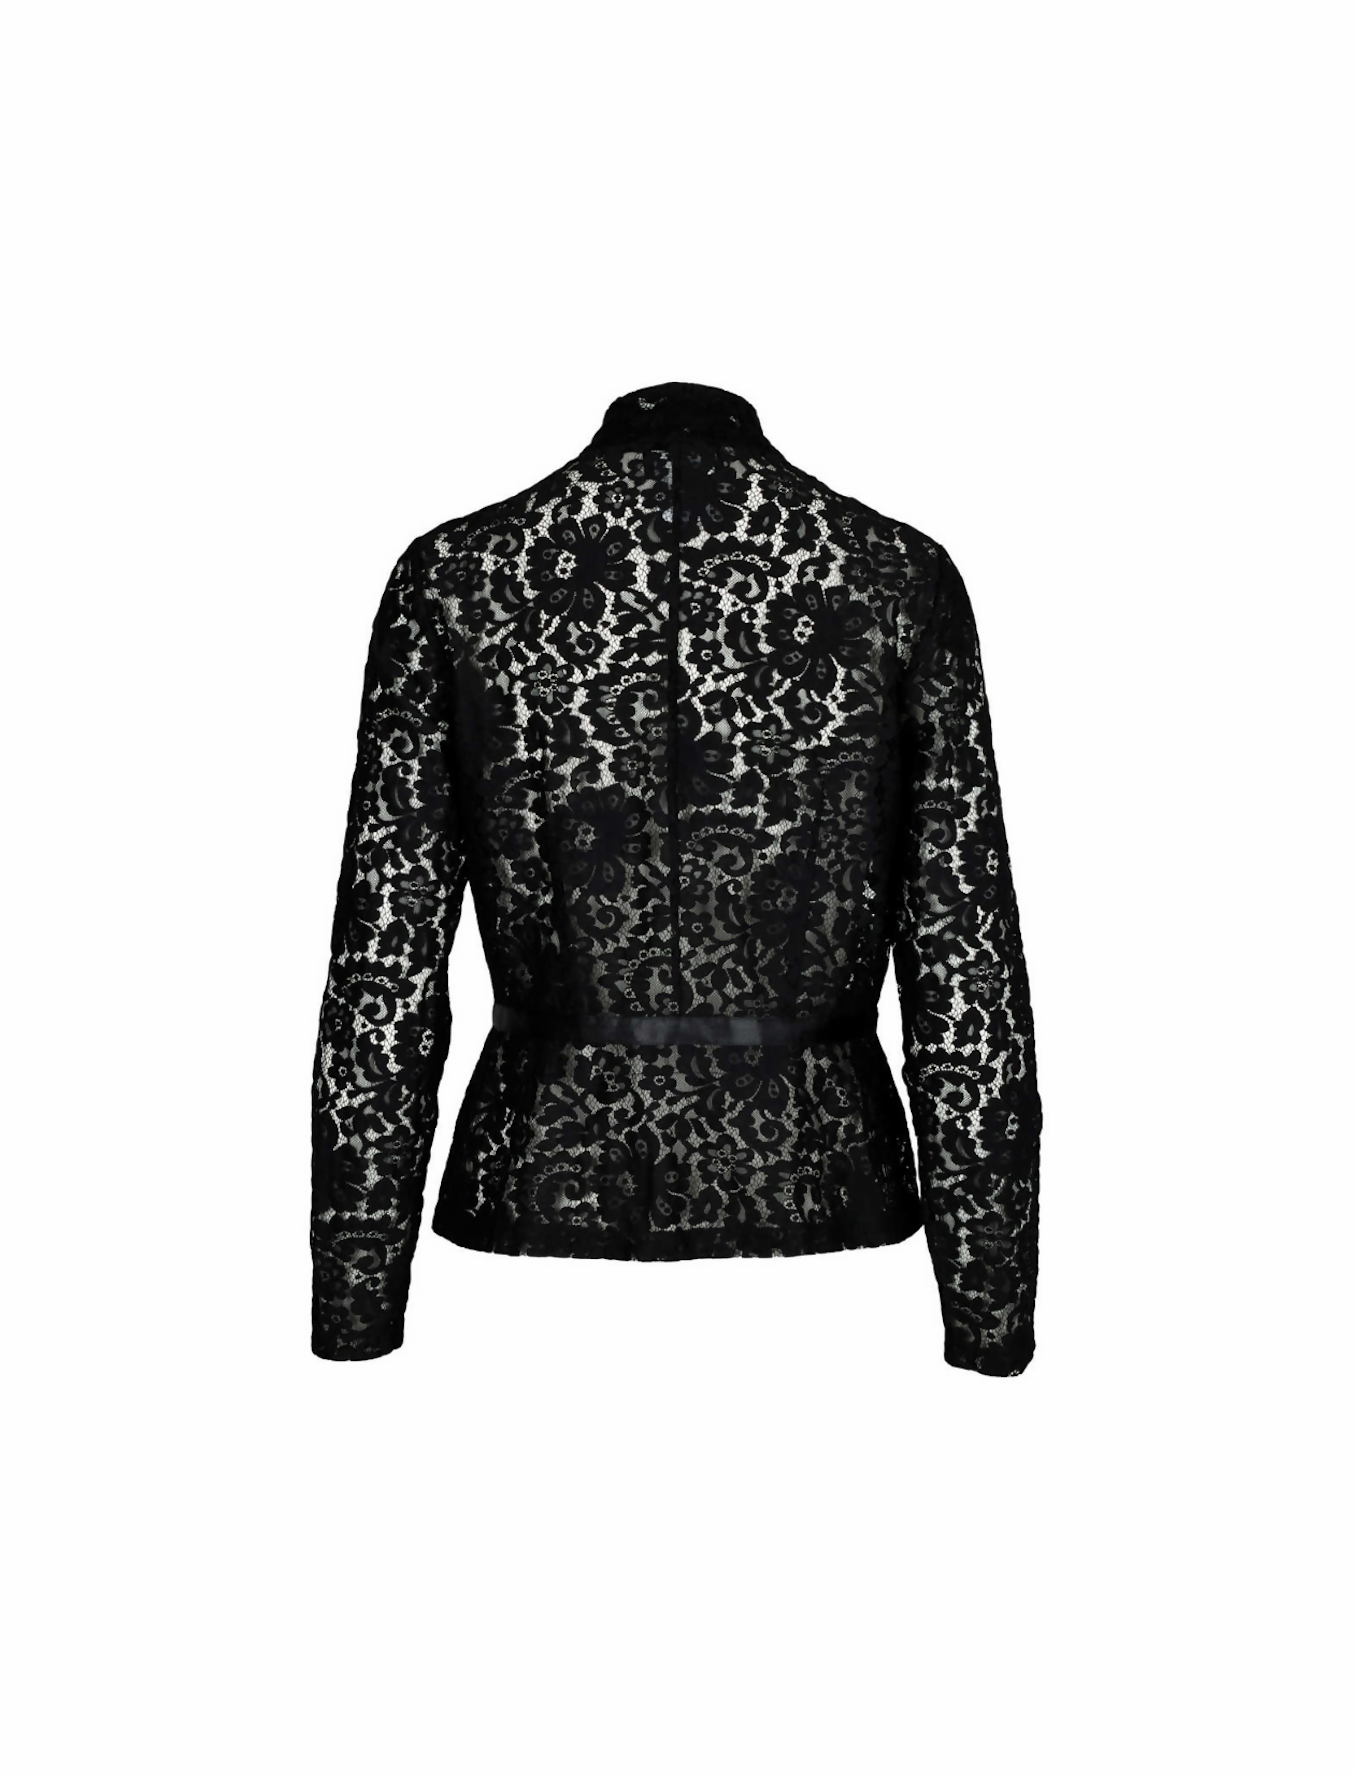 Chanel Jacket - Lace